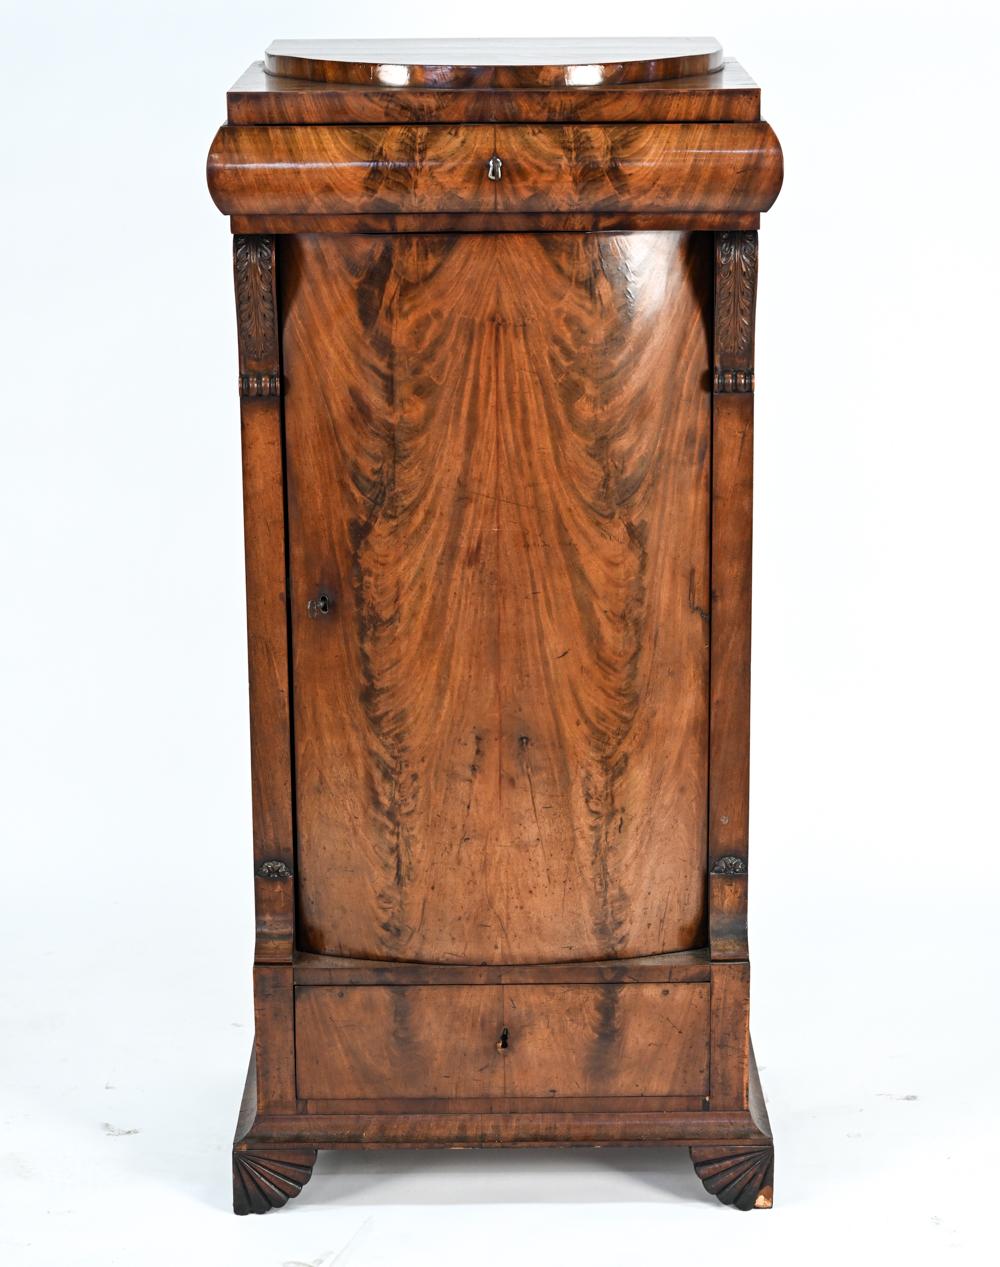 An antique Biedermeier cabinet in mahogany, c. 1870.